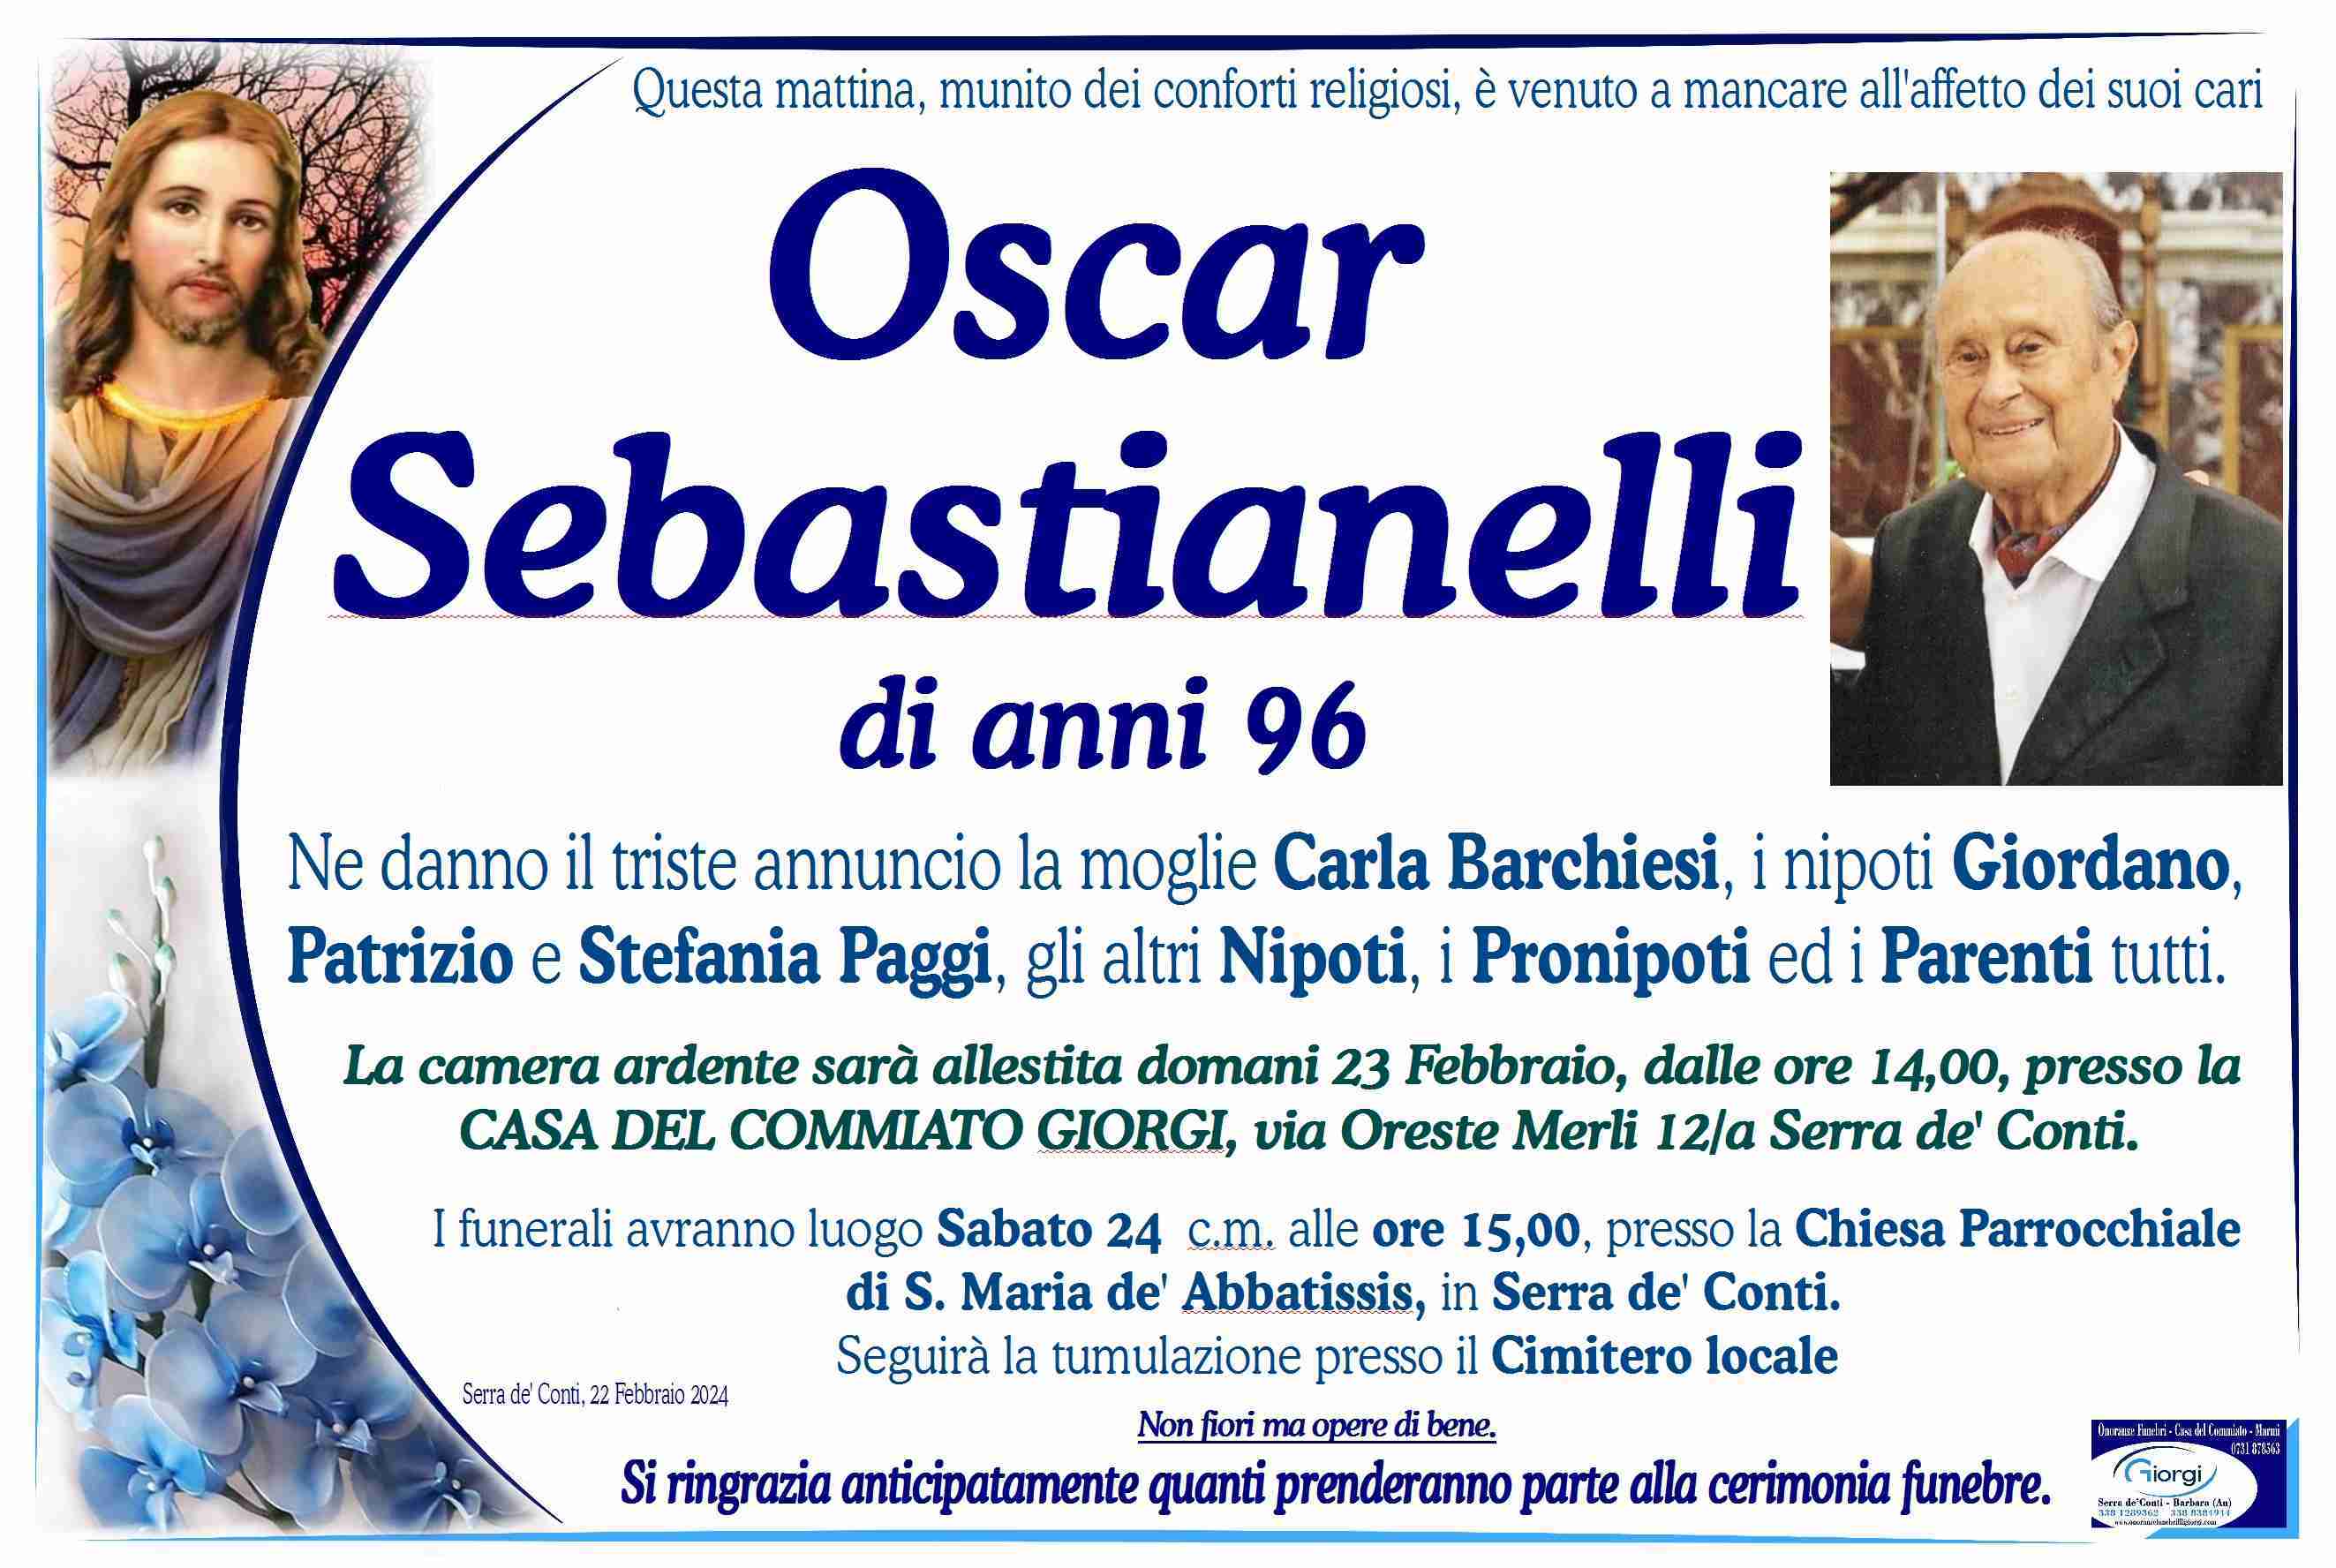 Oscar Sebastianelli